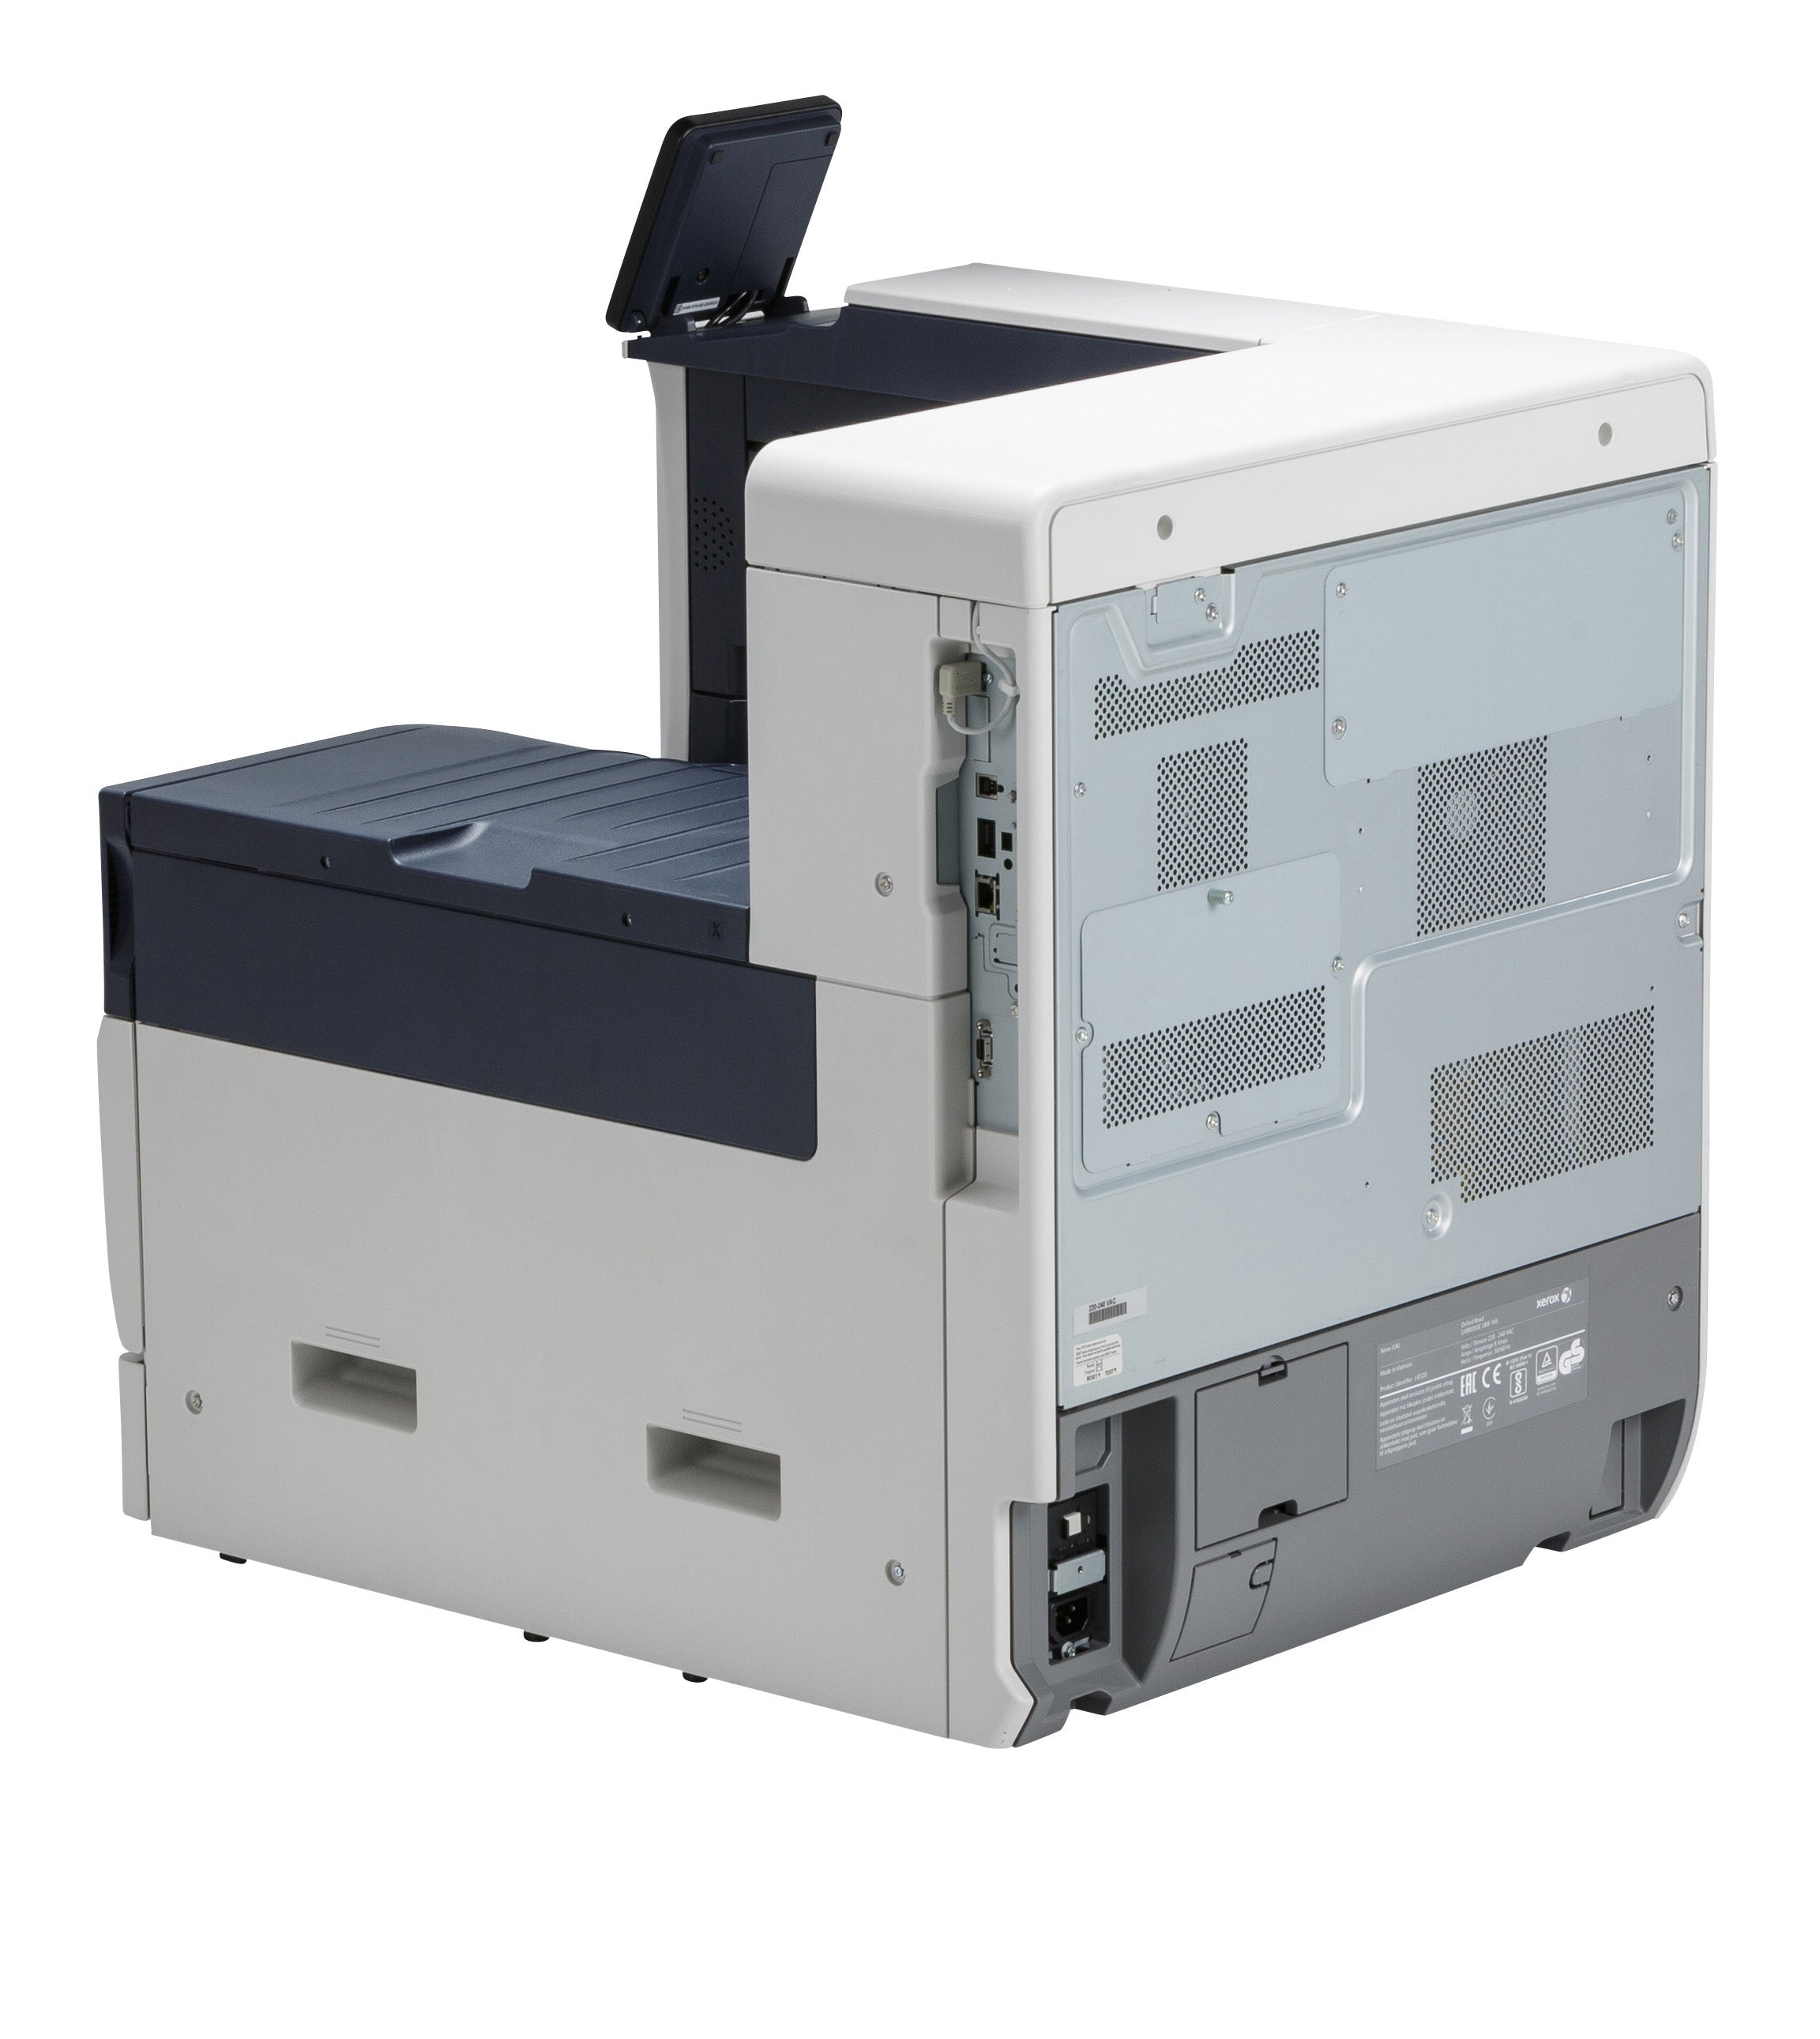 Xerox VersaLink C7000n A3 Colour LED / Laser Printer